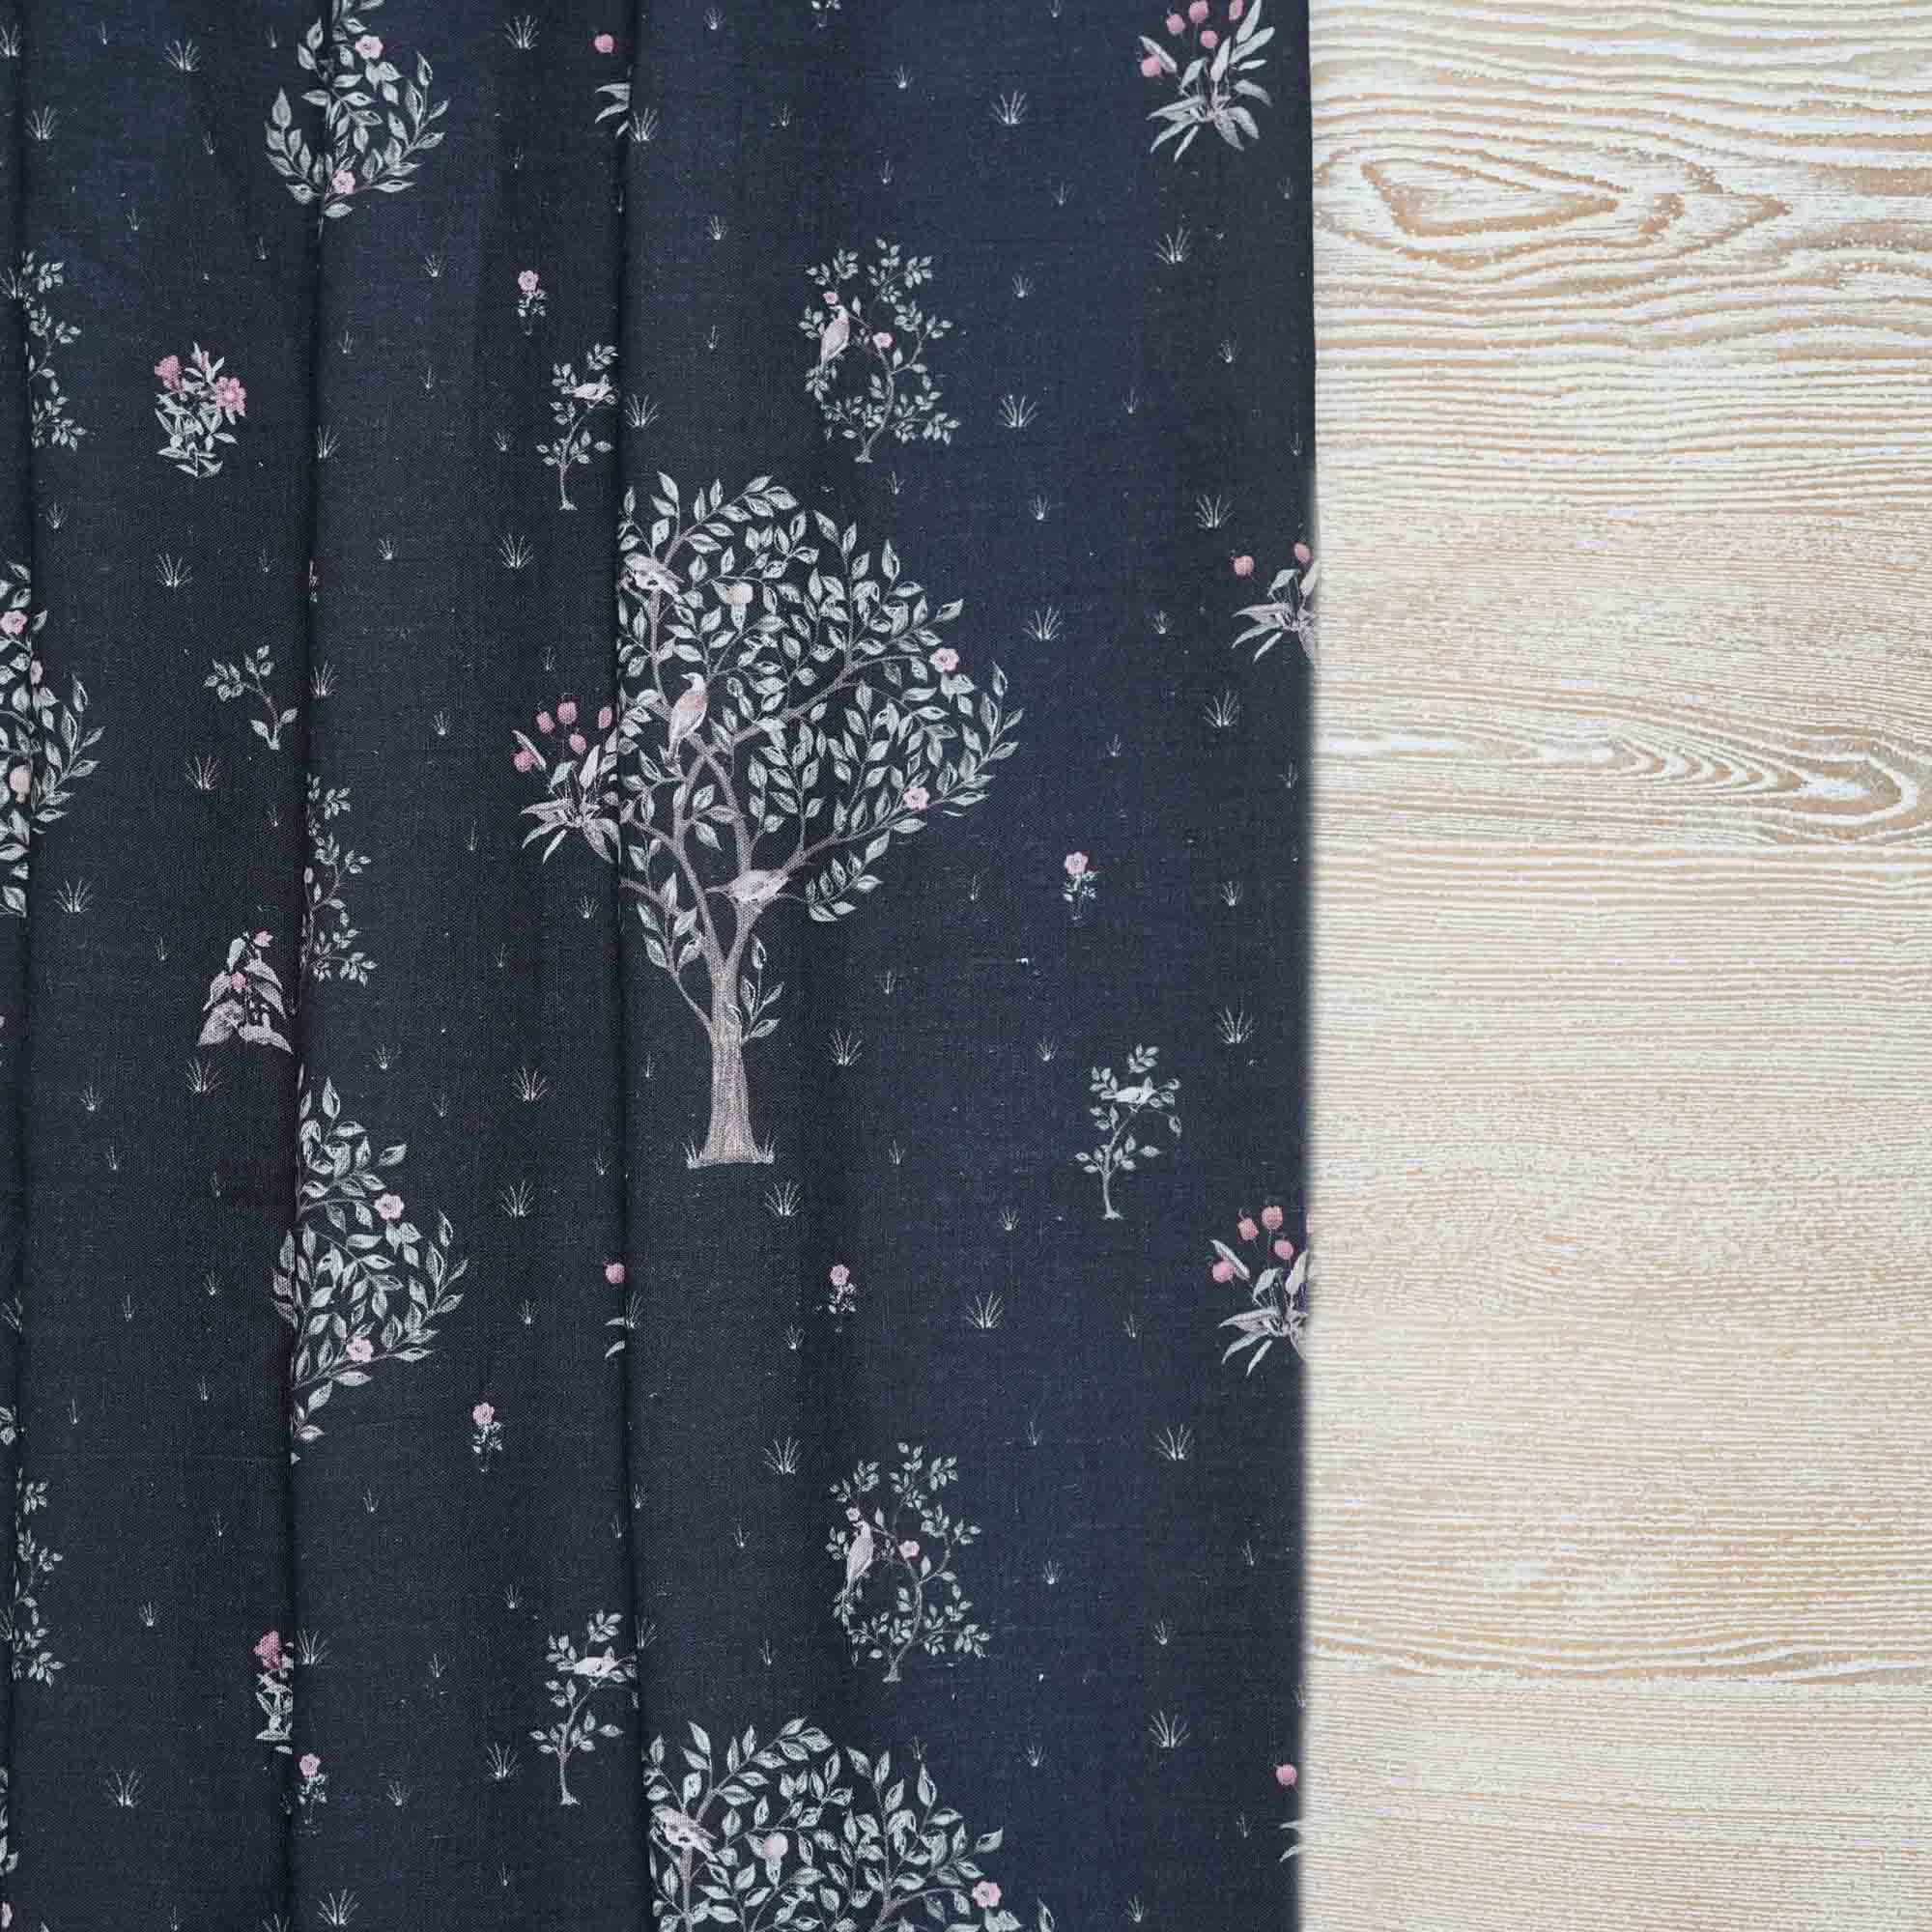 100% Linen Summer Garden Night Fabric (Horizontal Repeat)